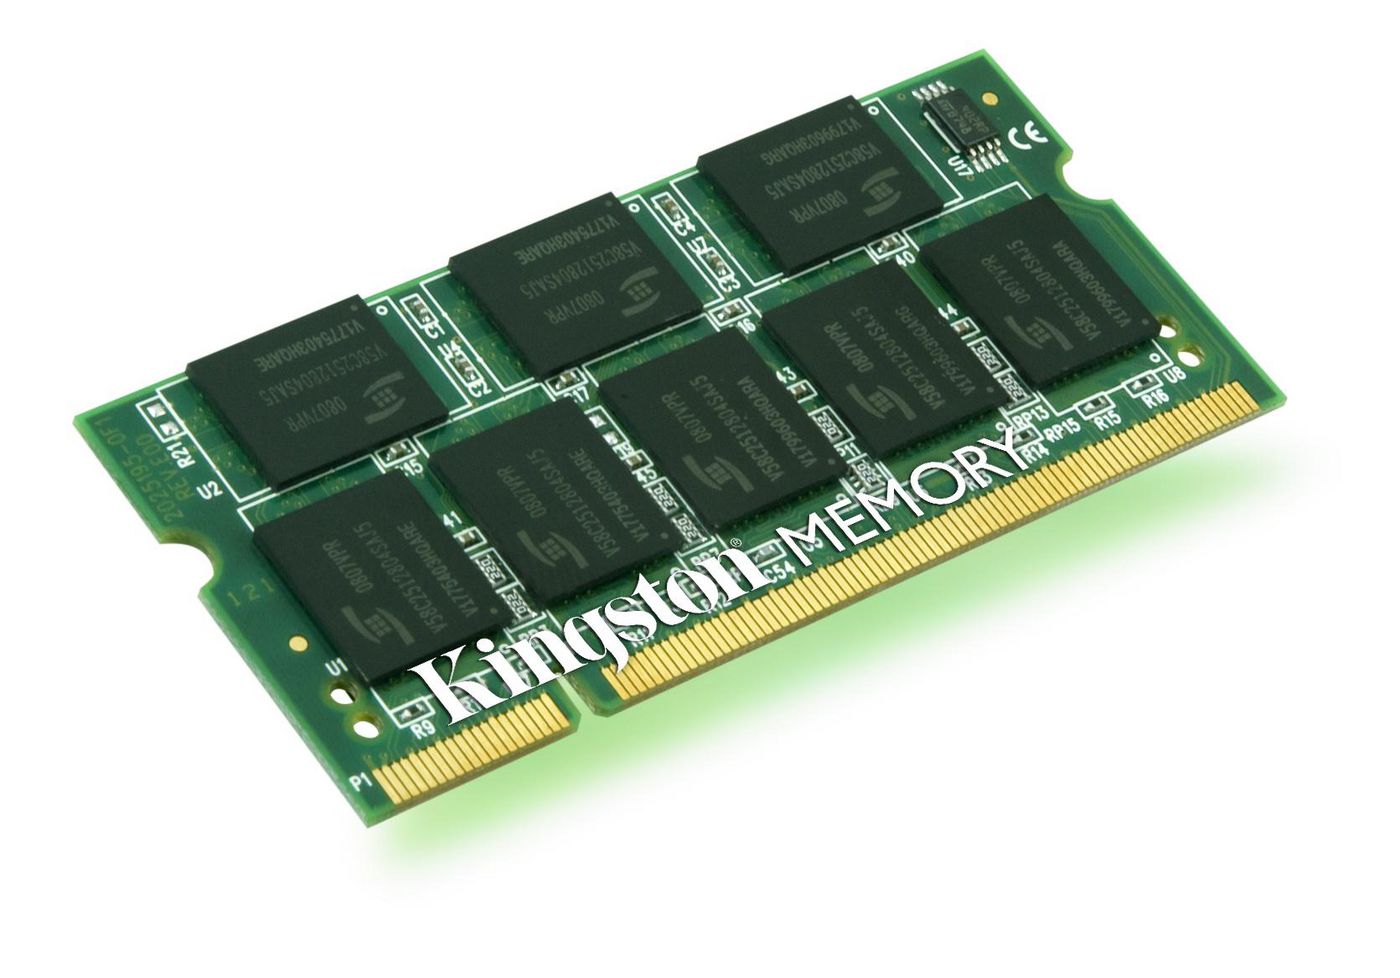 Kingston KTT3614256-RFB KTT3614/256-RFB 256MB DDR SO DIMM 